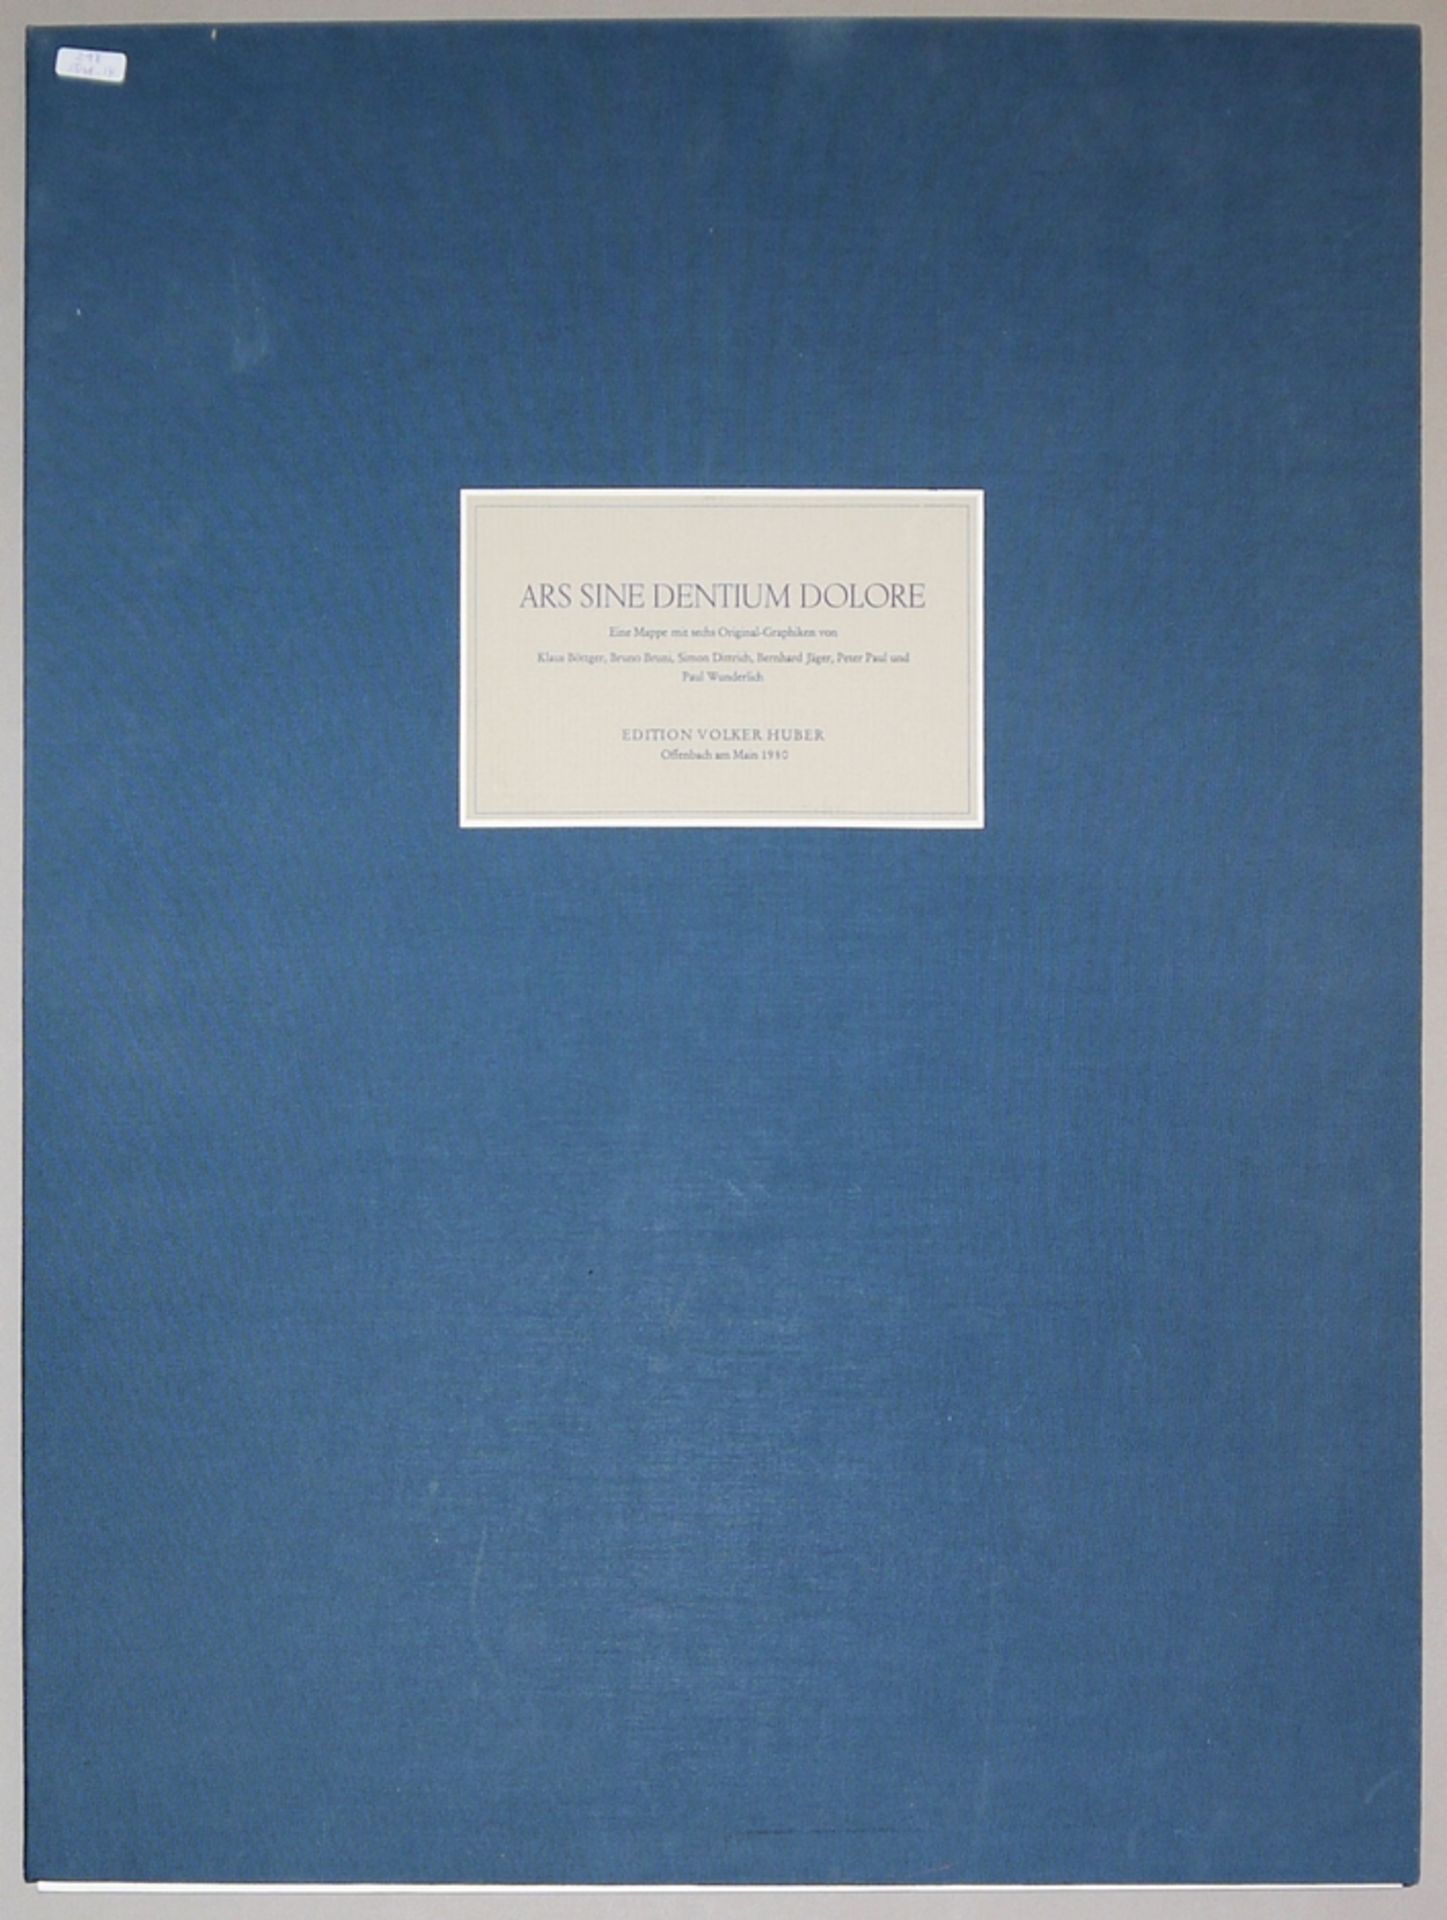 Ars sine dentium dolore. A portfolio with six original prints by Br. Bruni, P. Wunderlich, S. Dittr